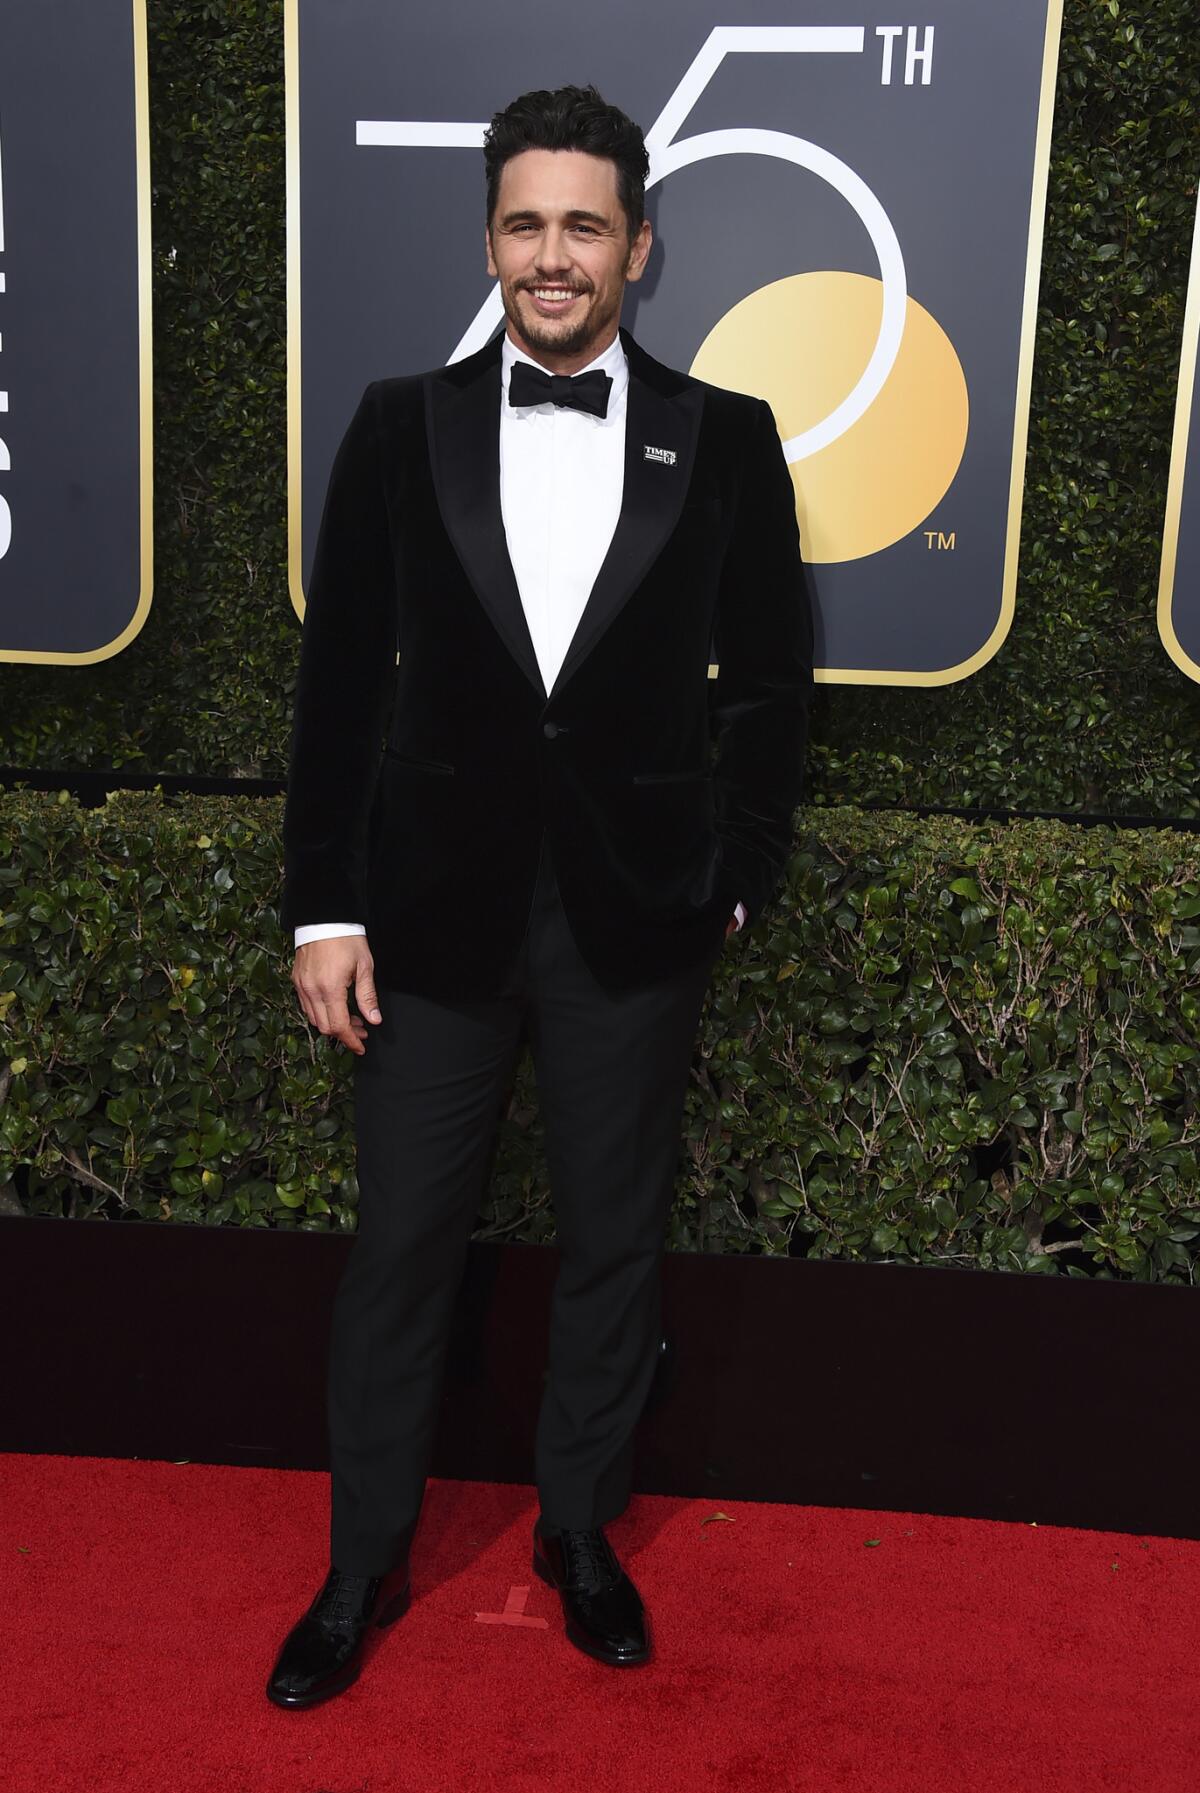 James Franco arrives at the Golden Globe Awards in Beverly Hills on Sunday.